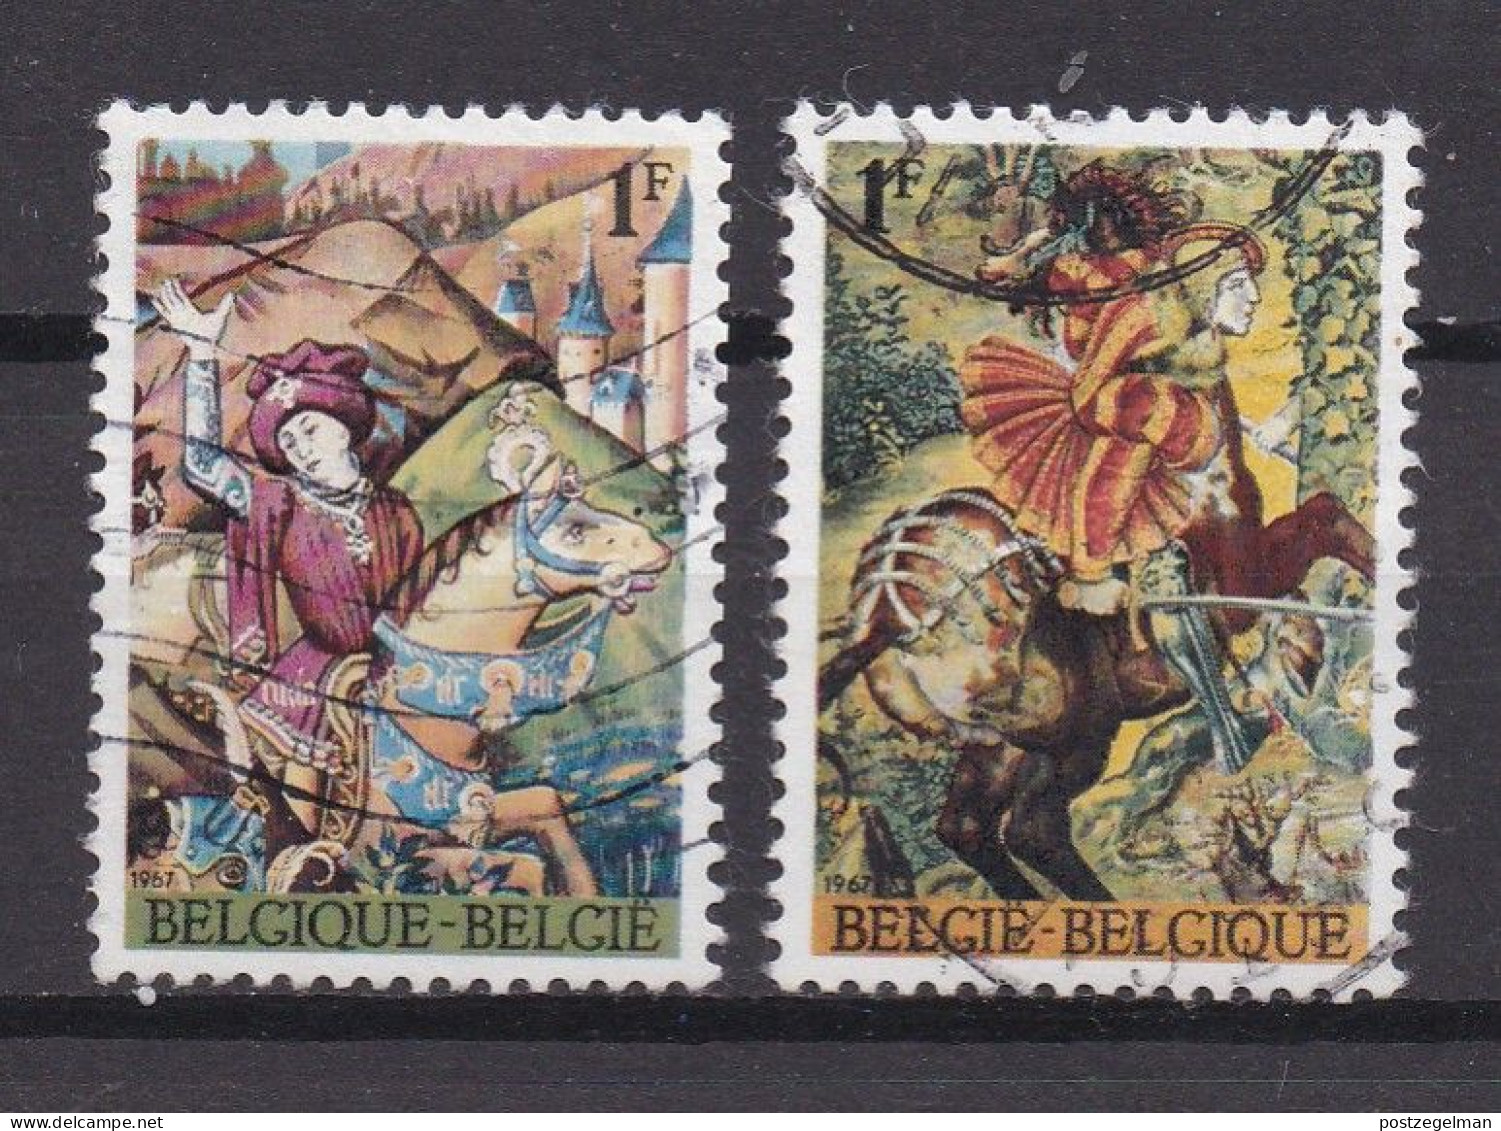 BELGIUM,1967, Used Stamp(s), Lodewyk De Raet , M1482-1483 , Scan 10445, - Used Stamps